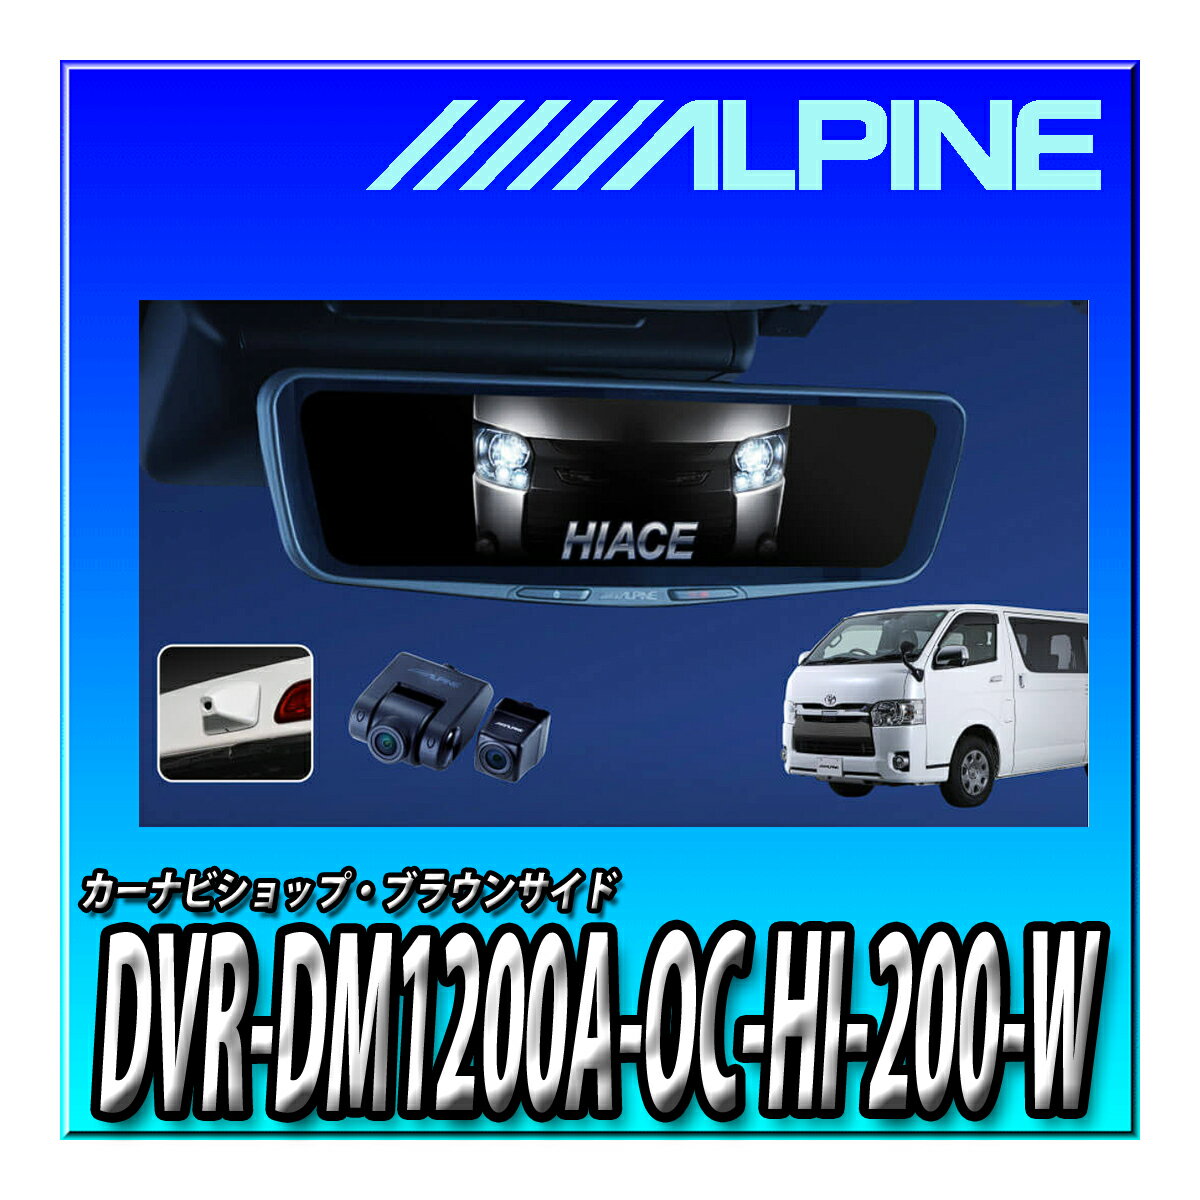 DVR-DM1200A-OC-HI-200-W アルパイン(ALPINE) ハイエース(2013.12-現在)専用 ドライブレコーダー搭載 1..